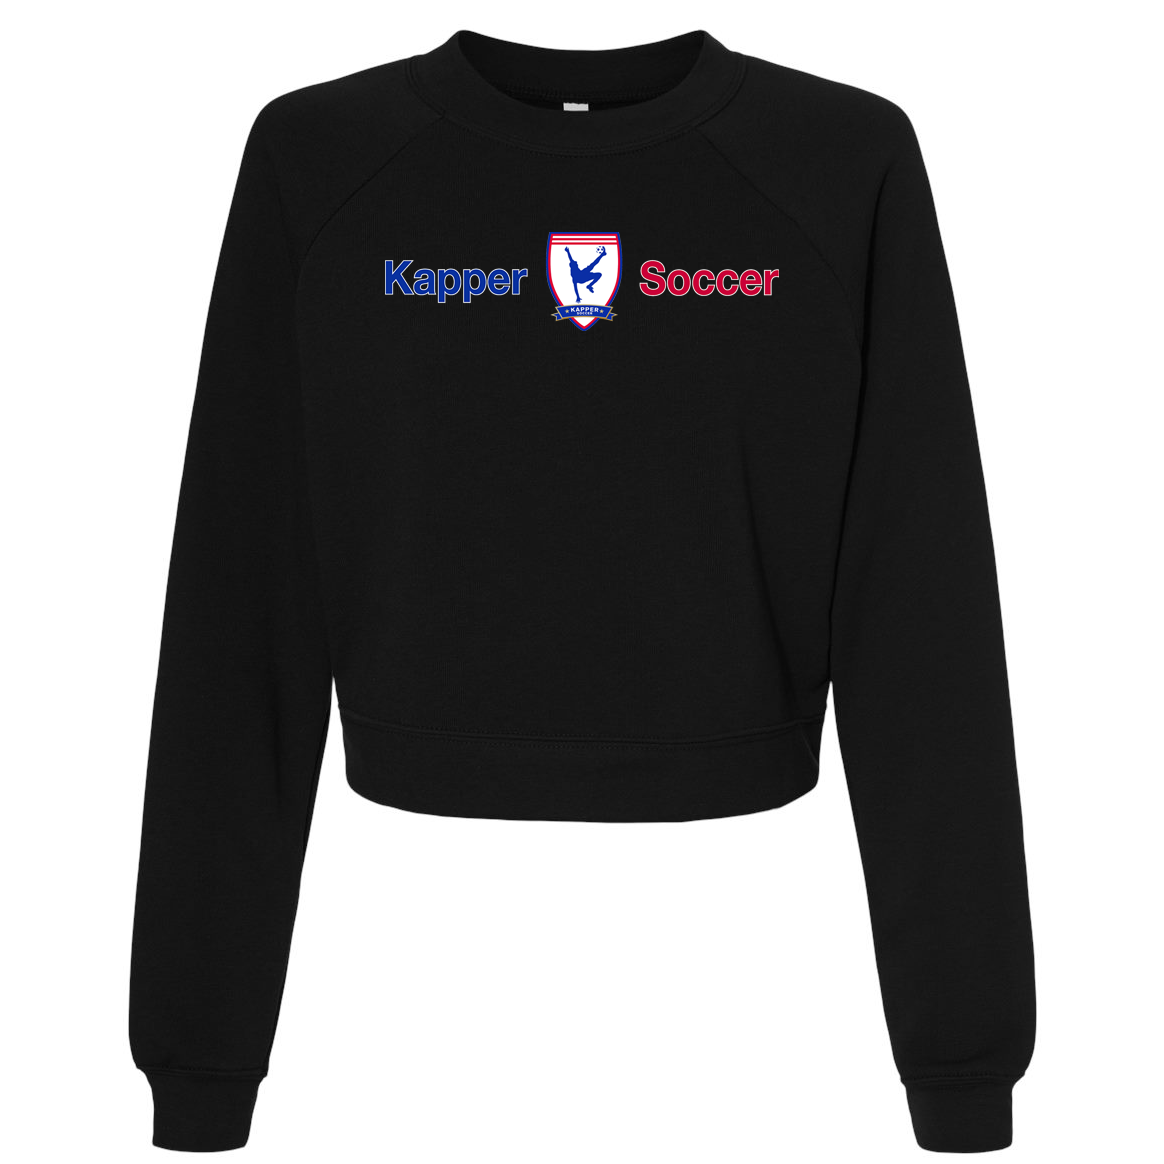 Kapper Soccer Women's Cropped Raglan Pullover Fleece